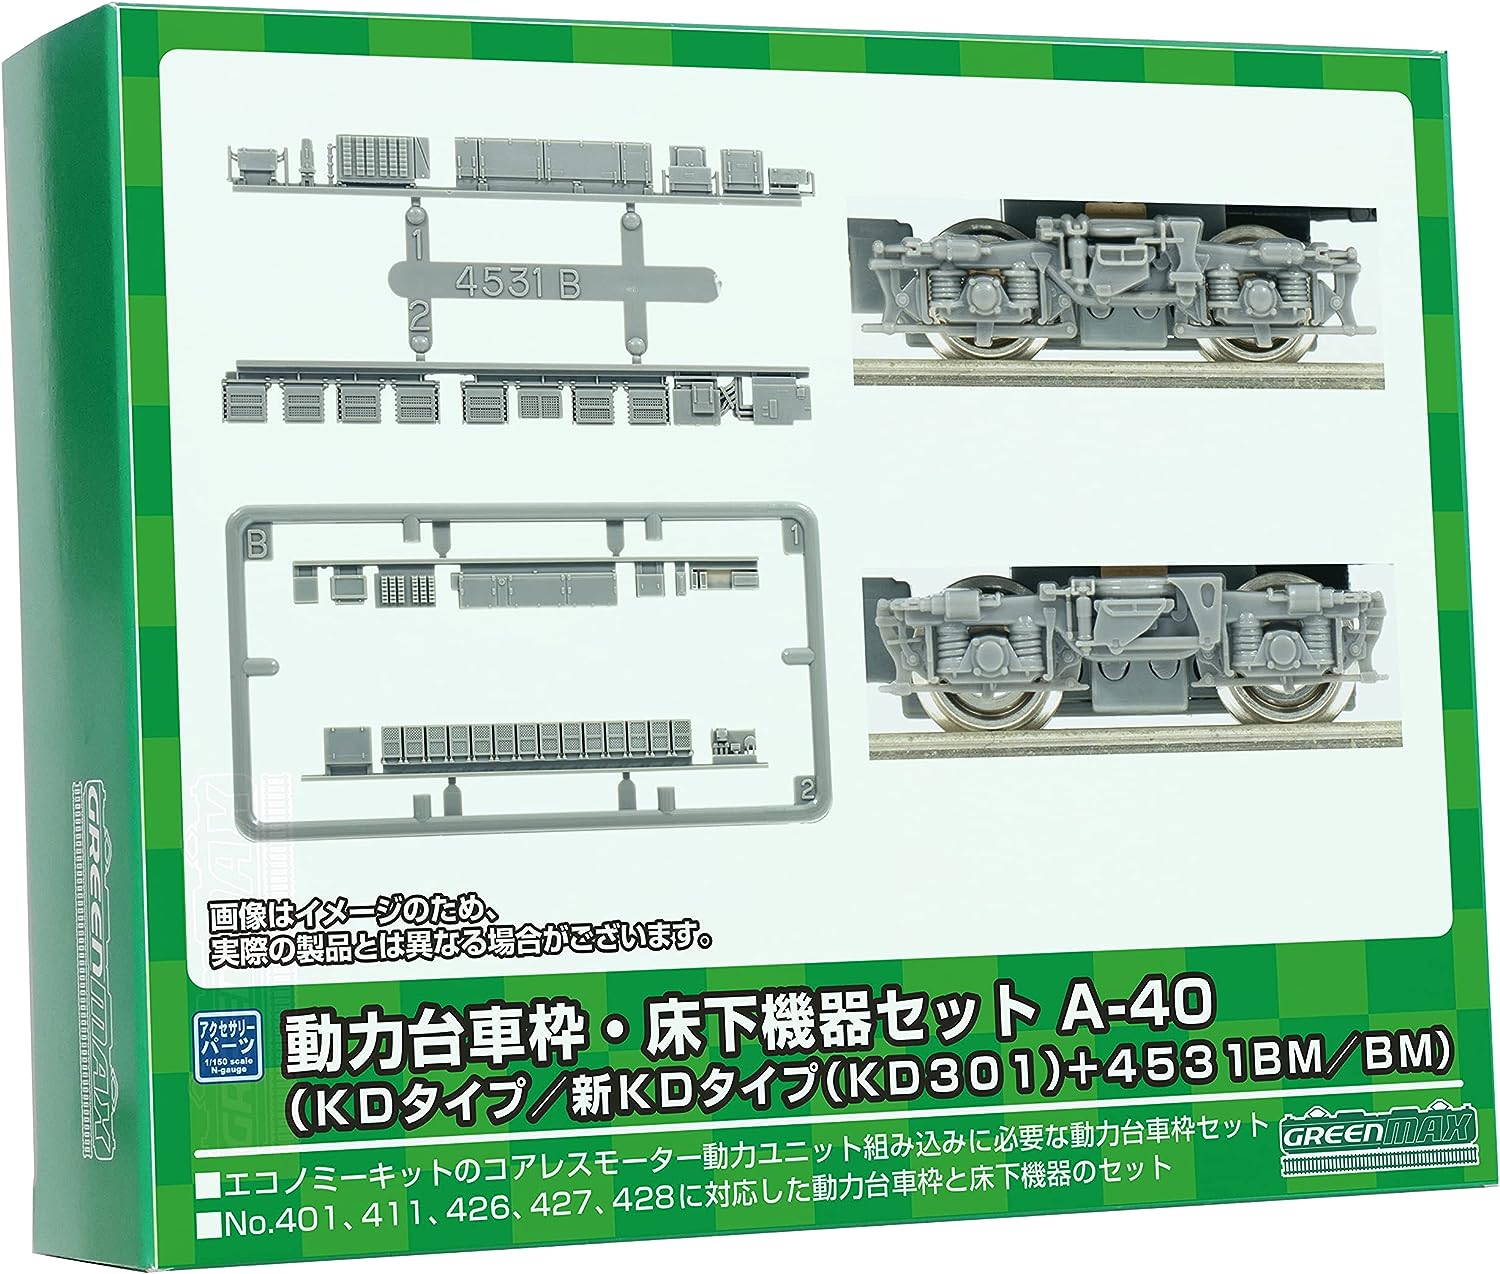 8527 Power Dolly Frame and Underfloor Equipment Set A-40 (KD Type/New KD Type (KD301) + 4531BM/BM) Model Train Supplies